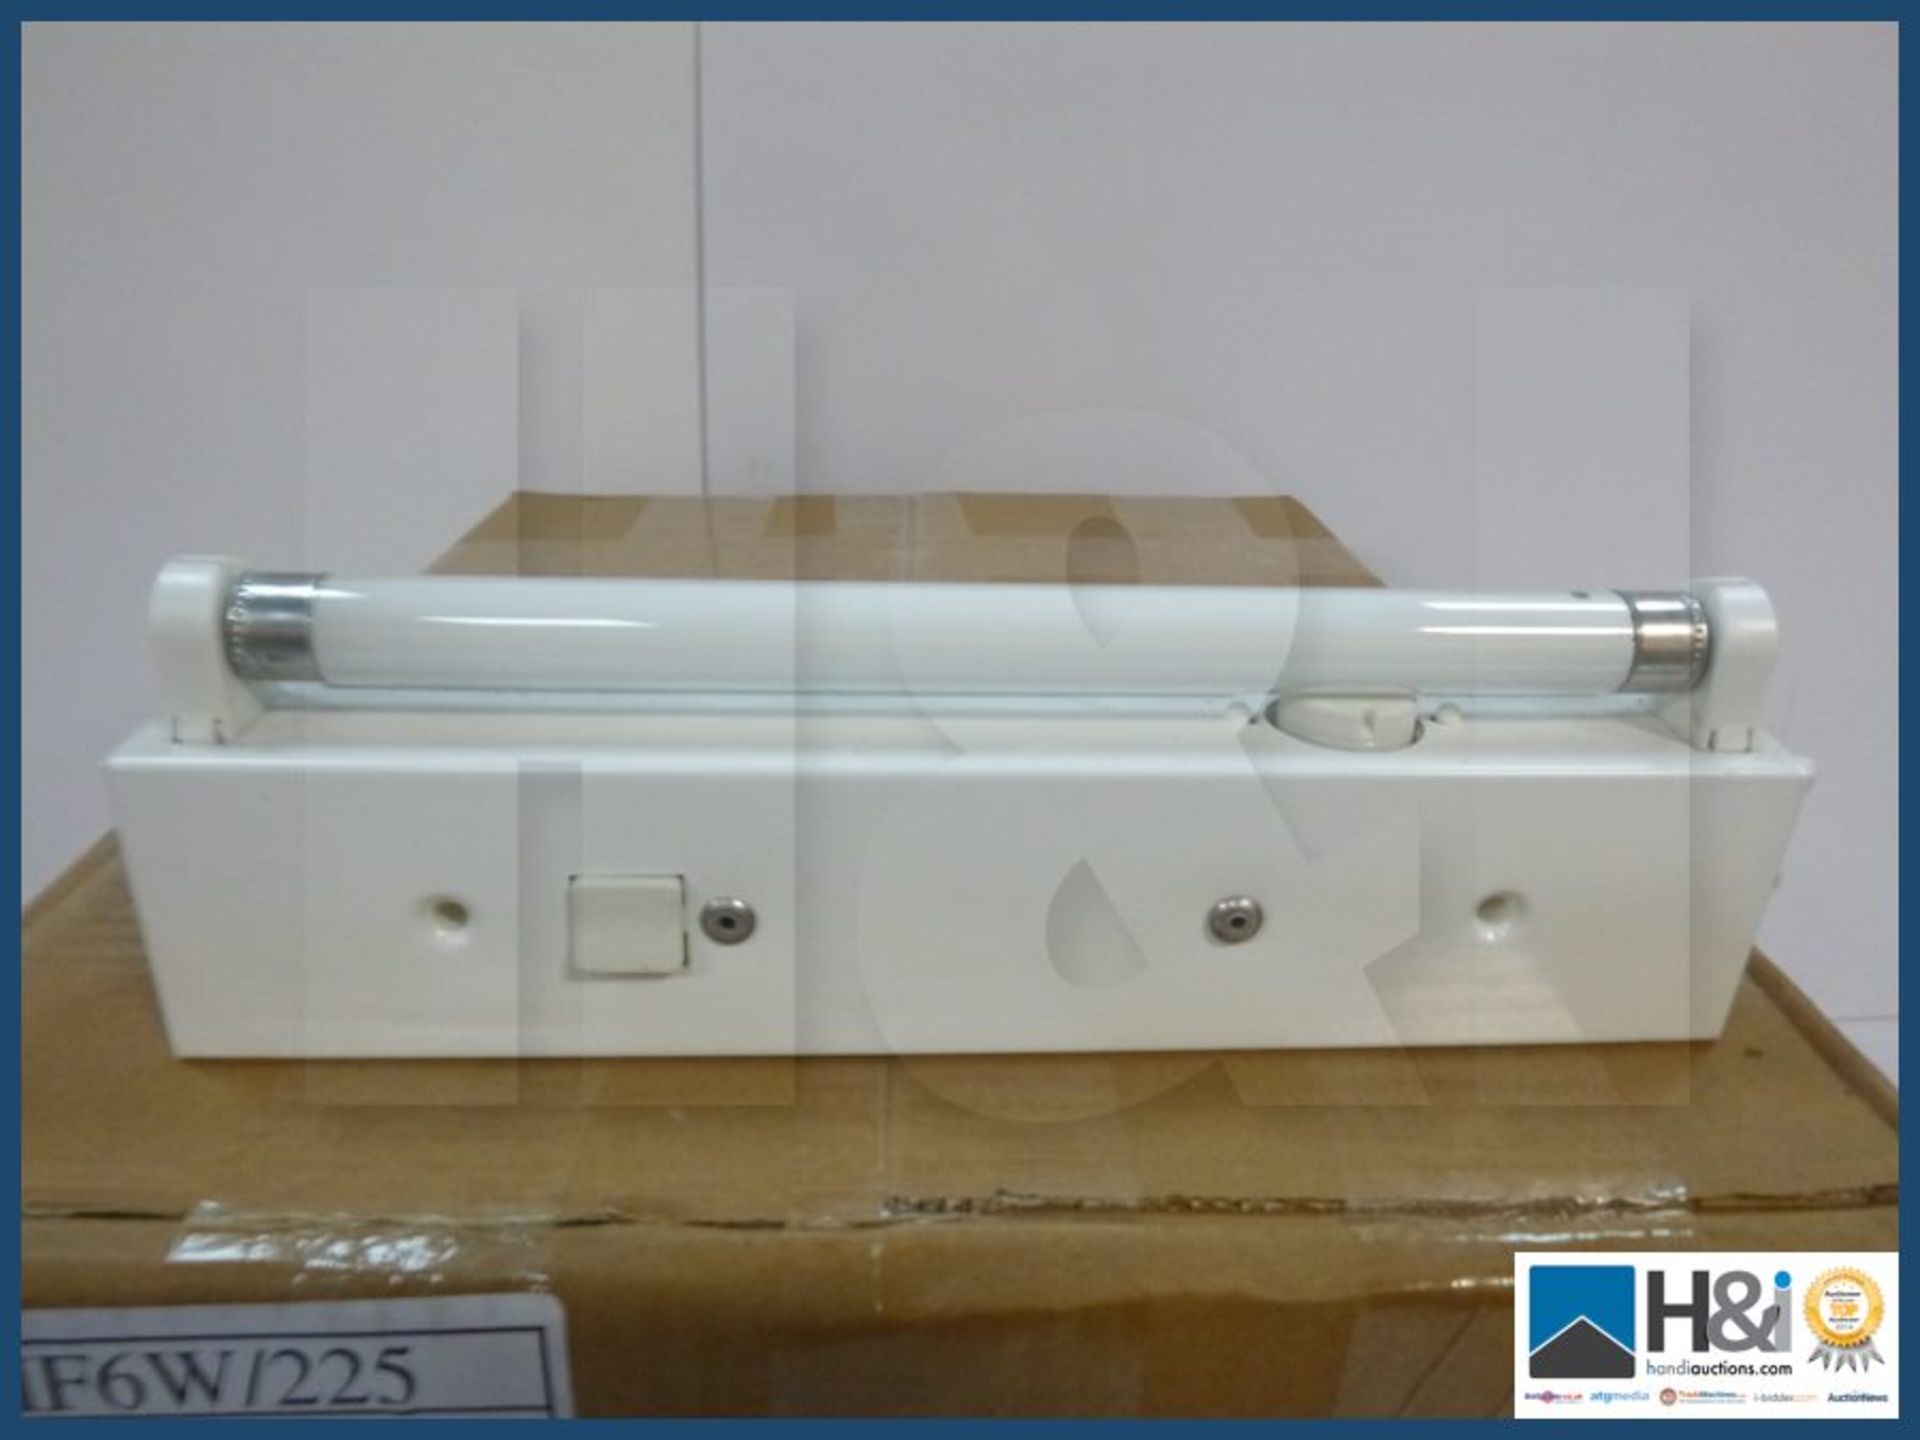 X5 6watt 225mm modular fluorescent fitting. - Image 3 of 3